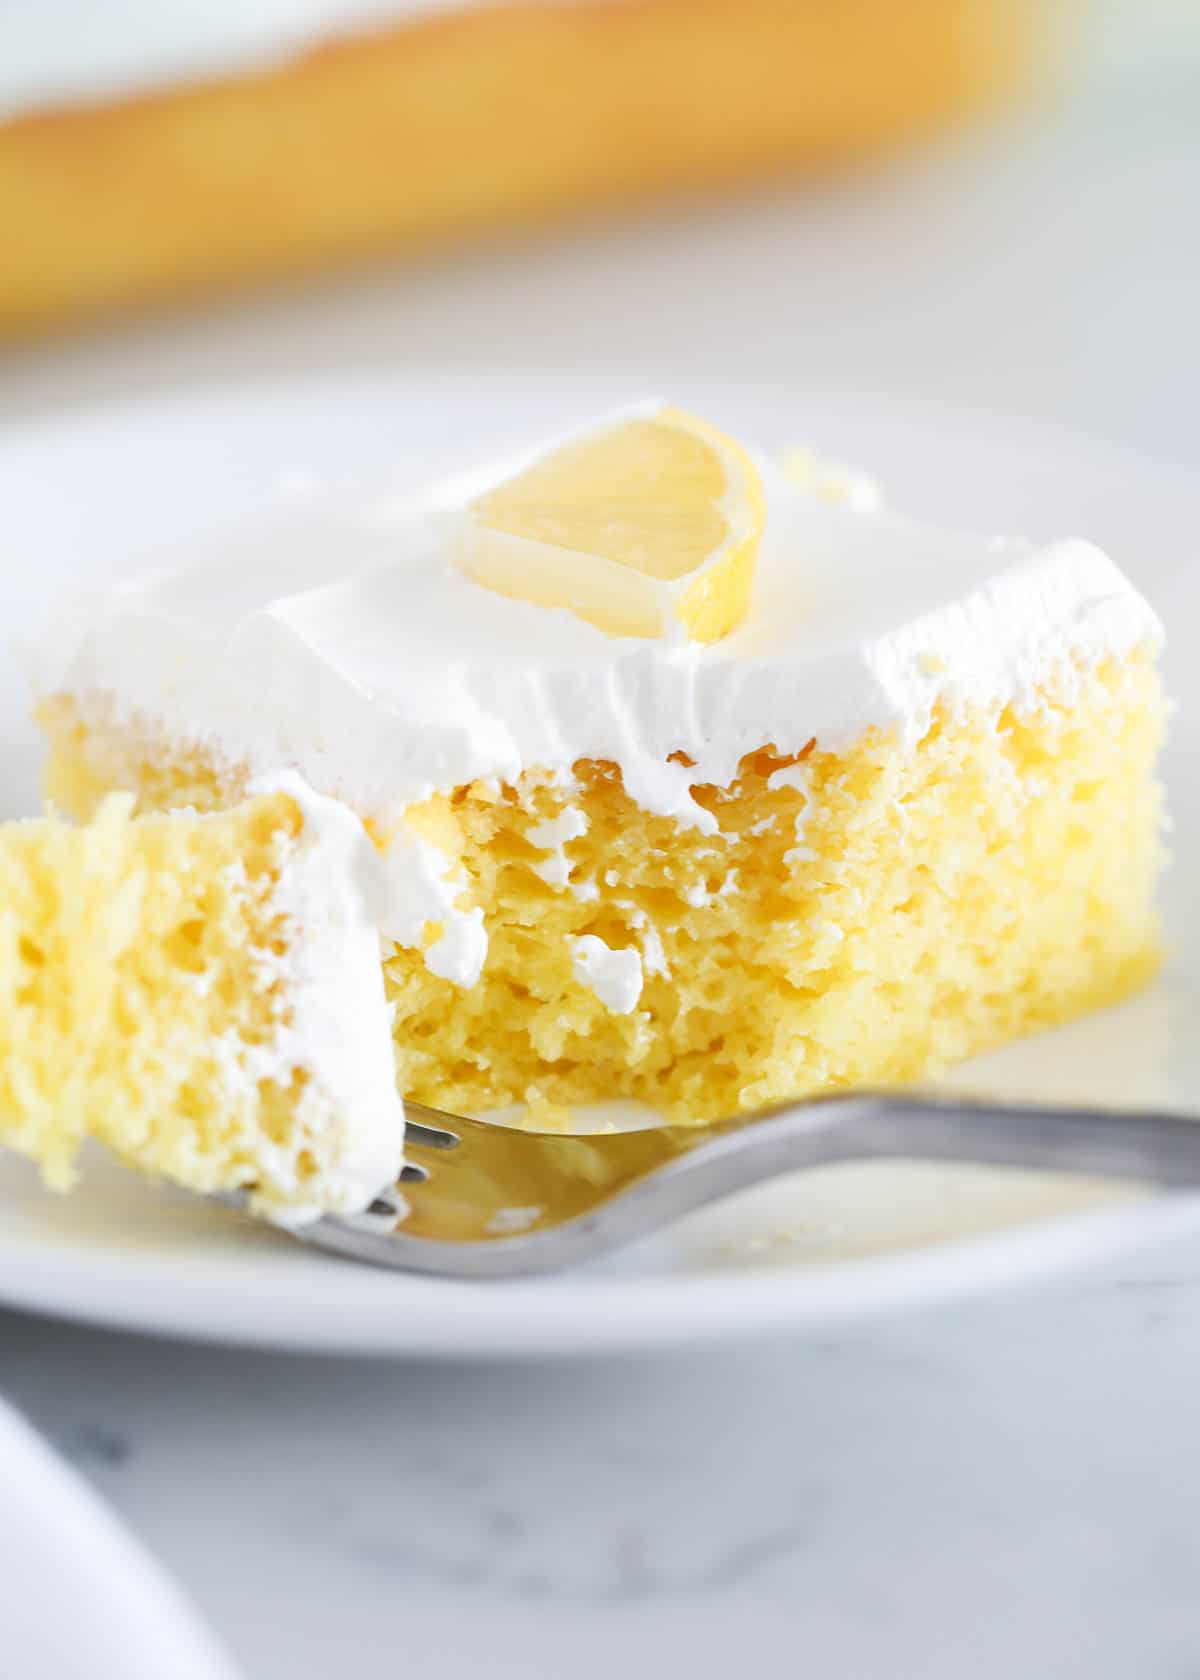 Slice of lemon cake with fork taking a bite. 